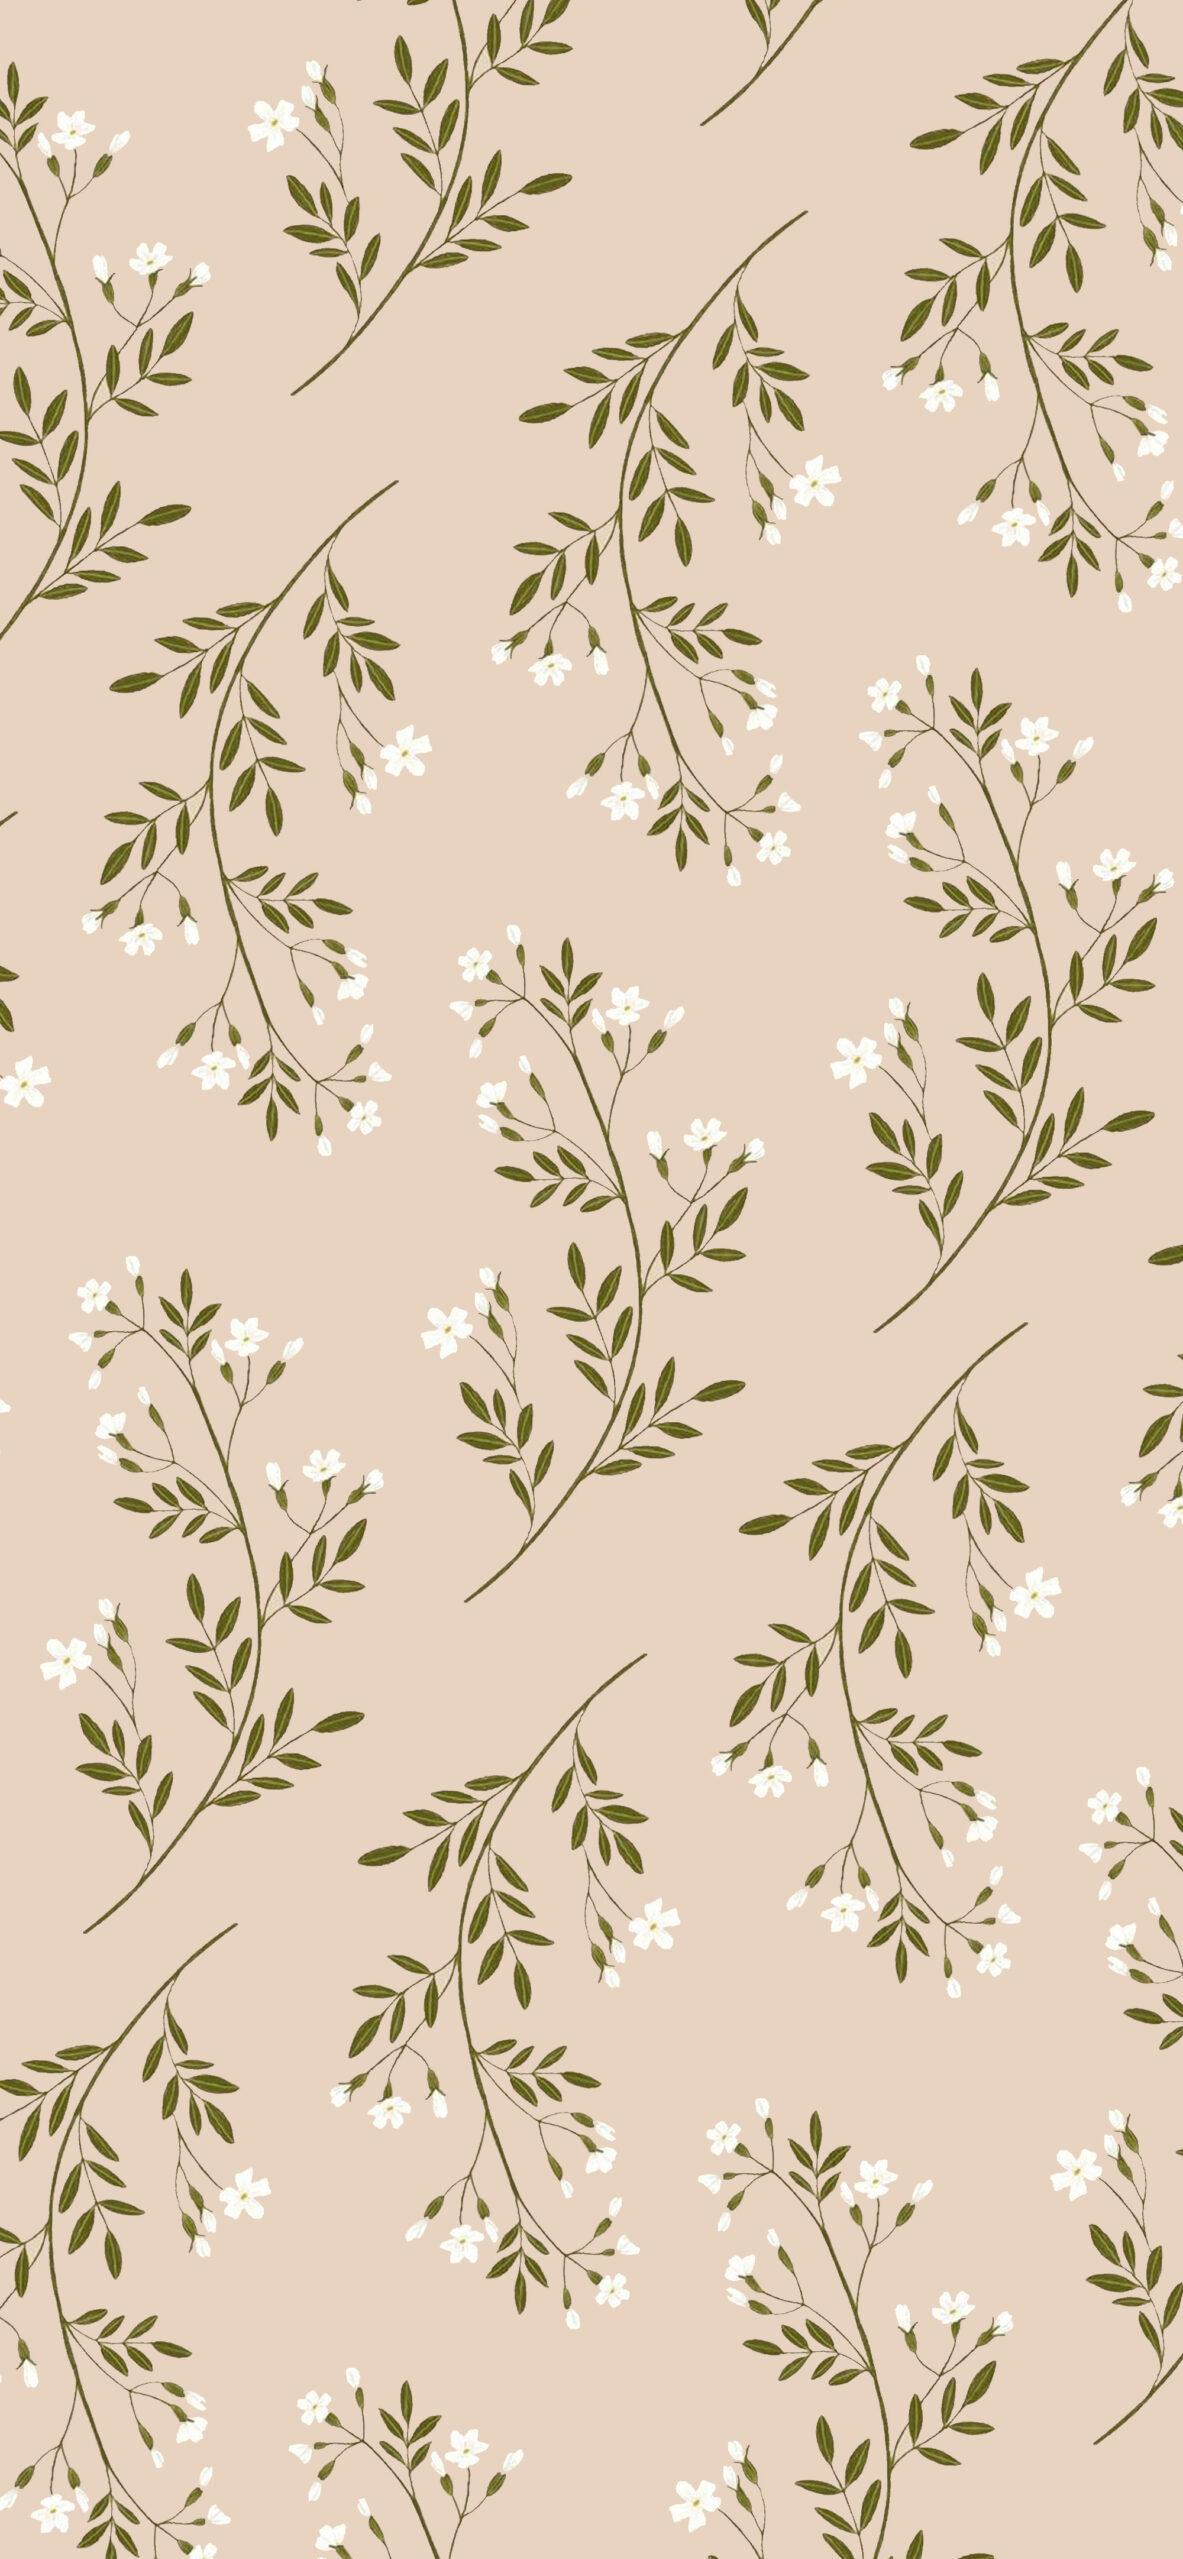 Jasmine Blossoms Beige Wallpaper Flower For iPhone